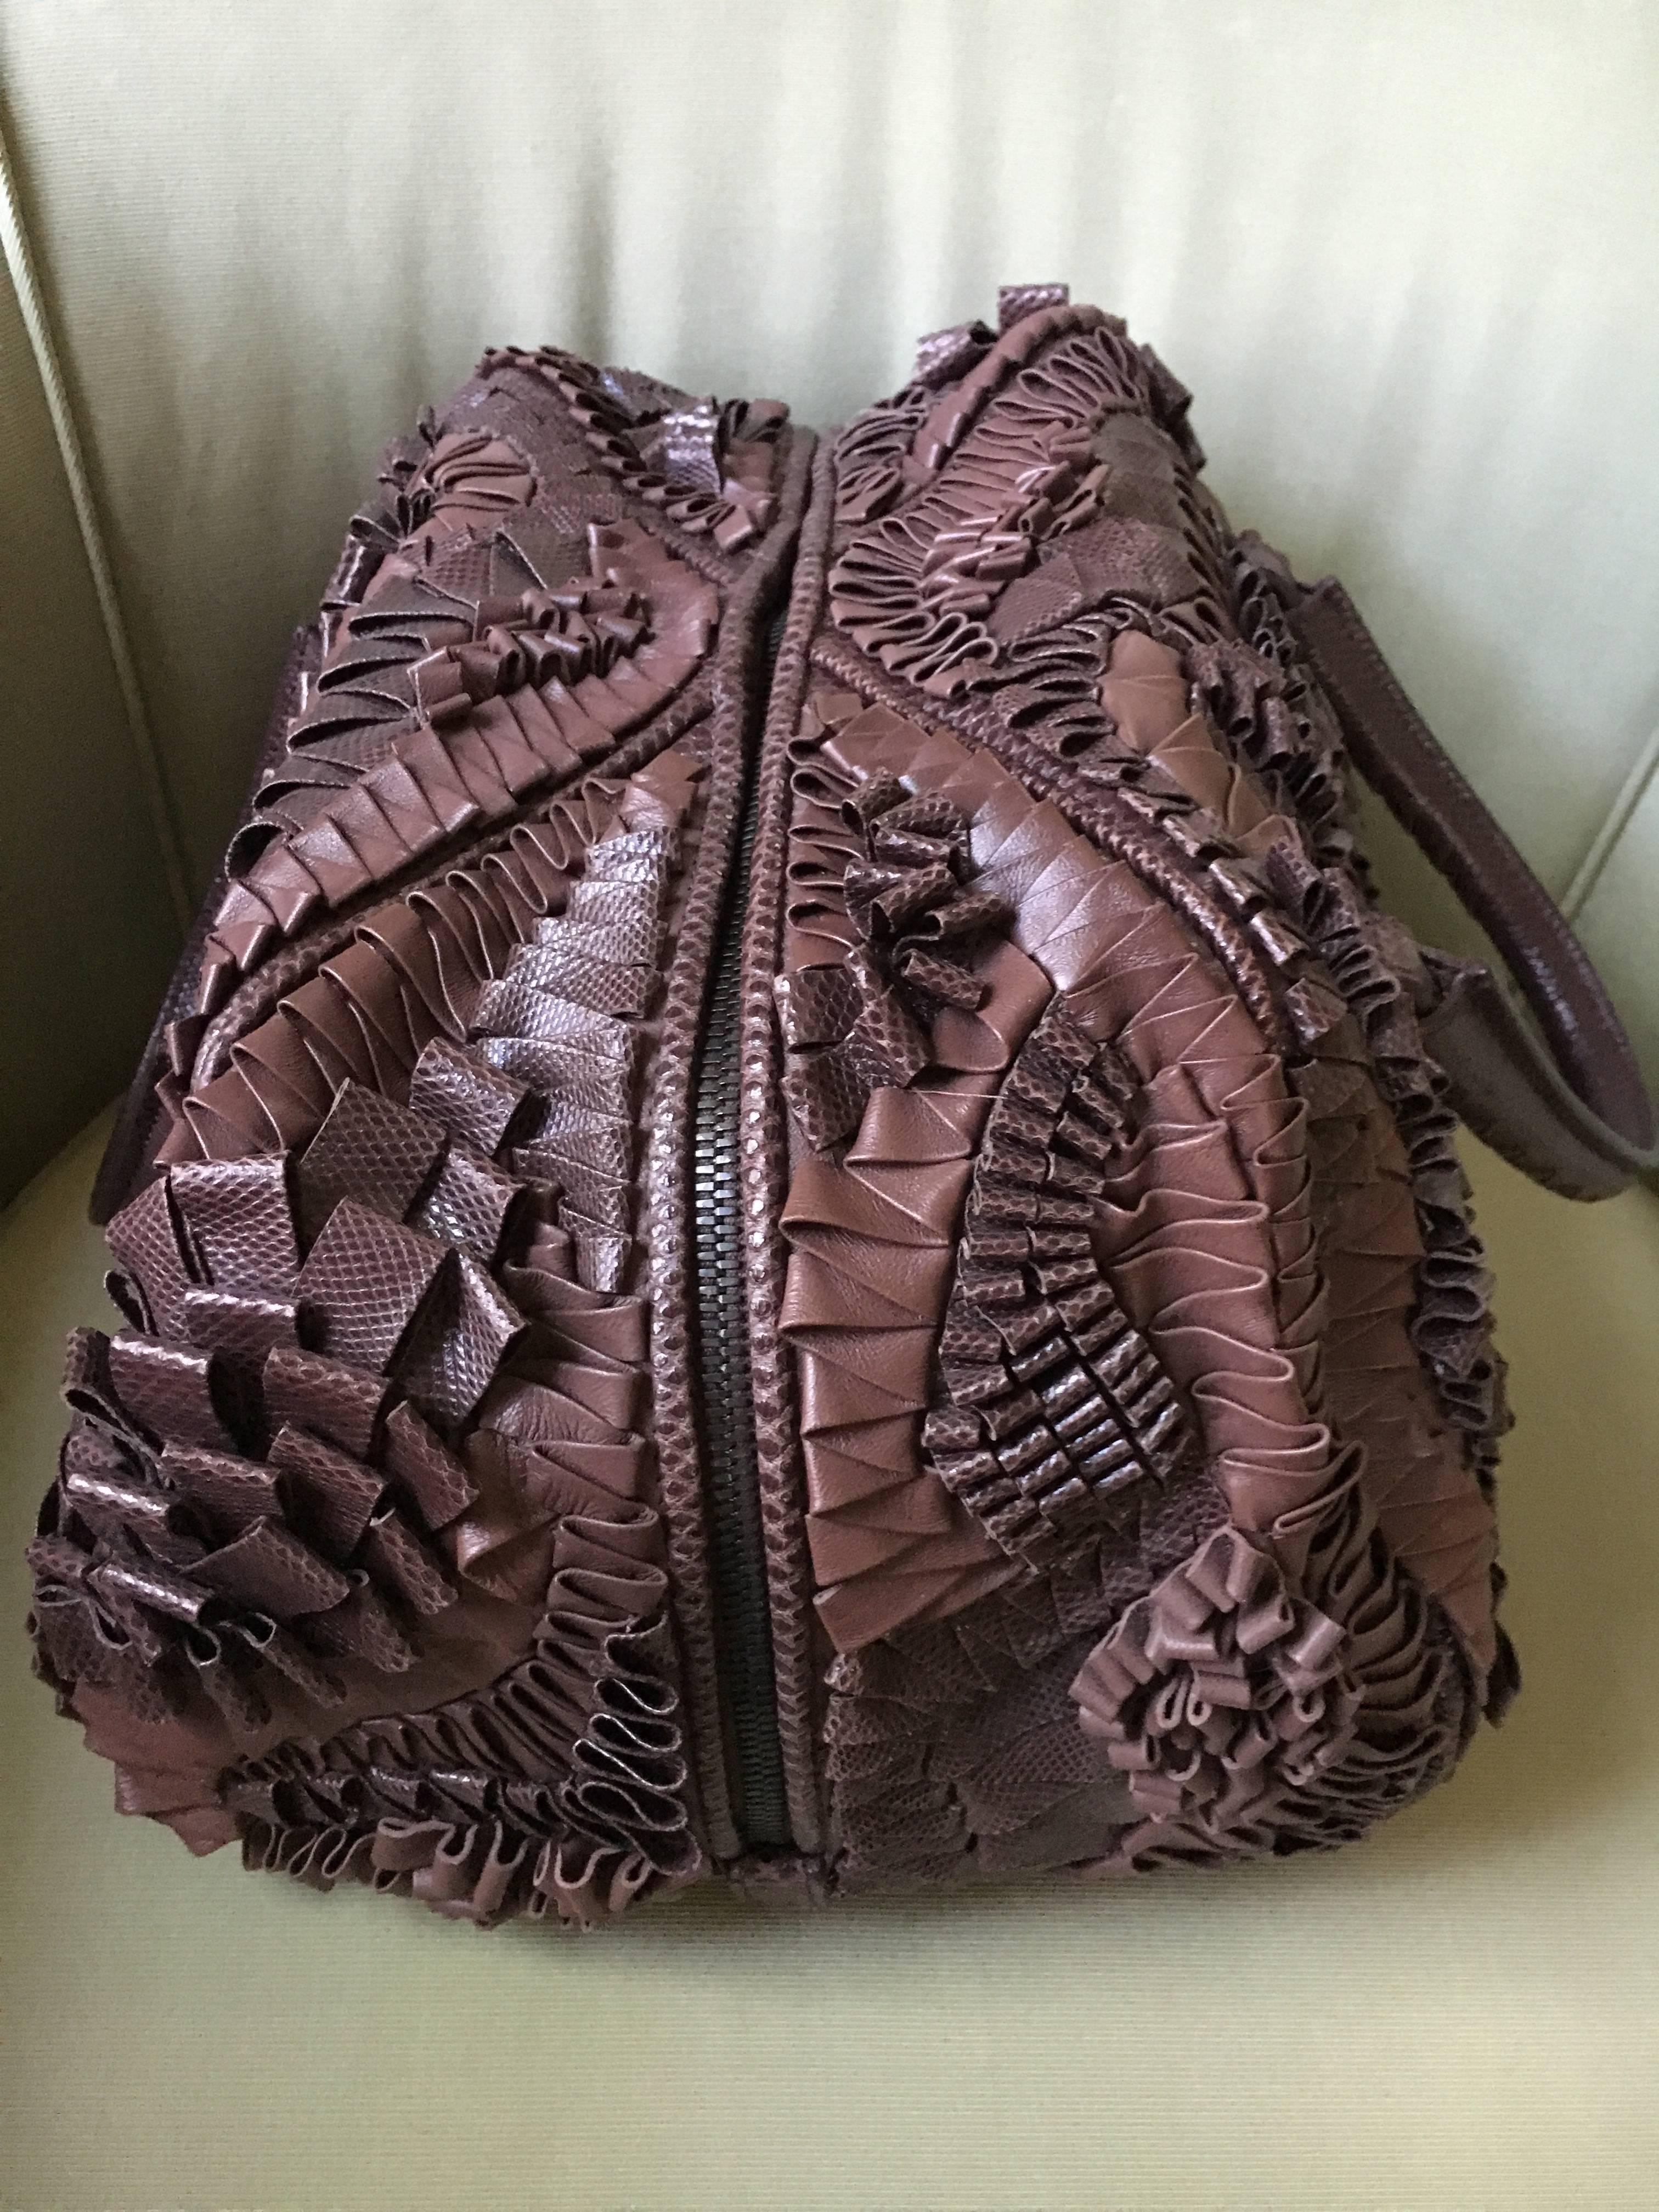 Bottega Veneta Rare Limited Edition Aubergine Woven Leather and Lizard Bag For Sale 3